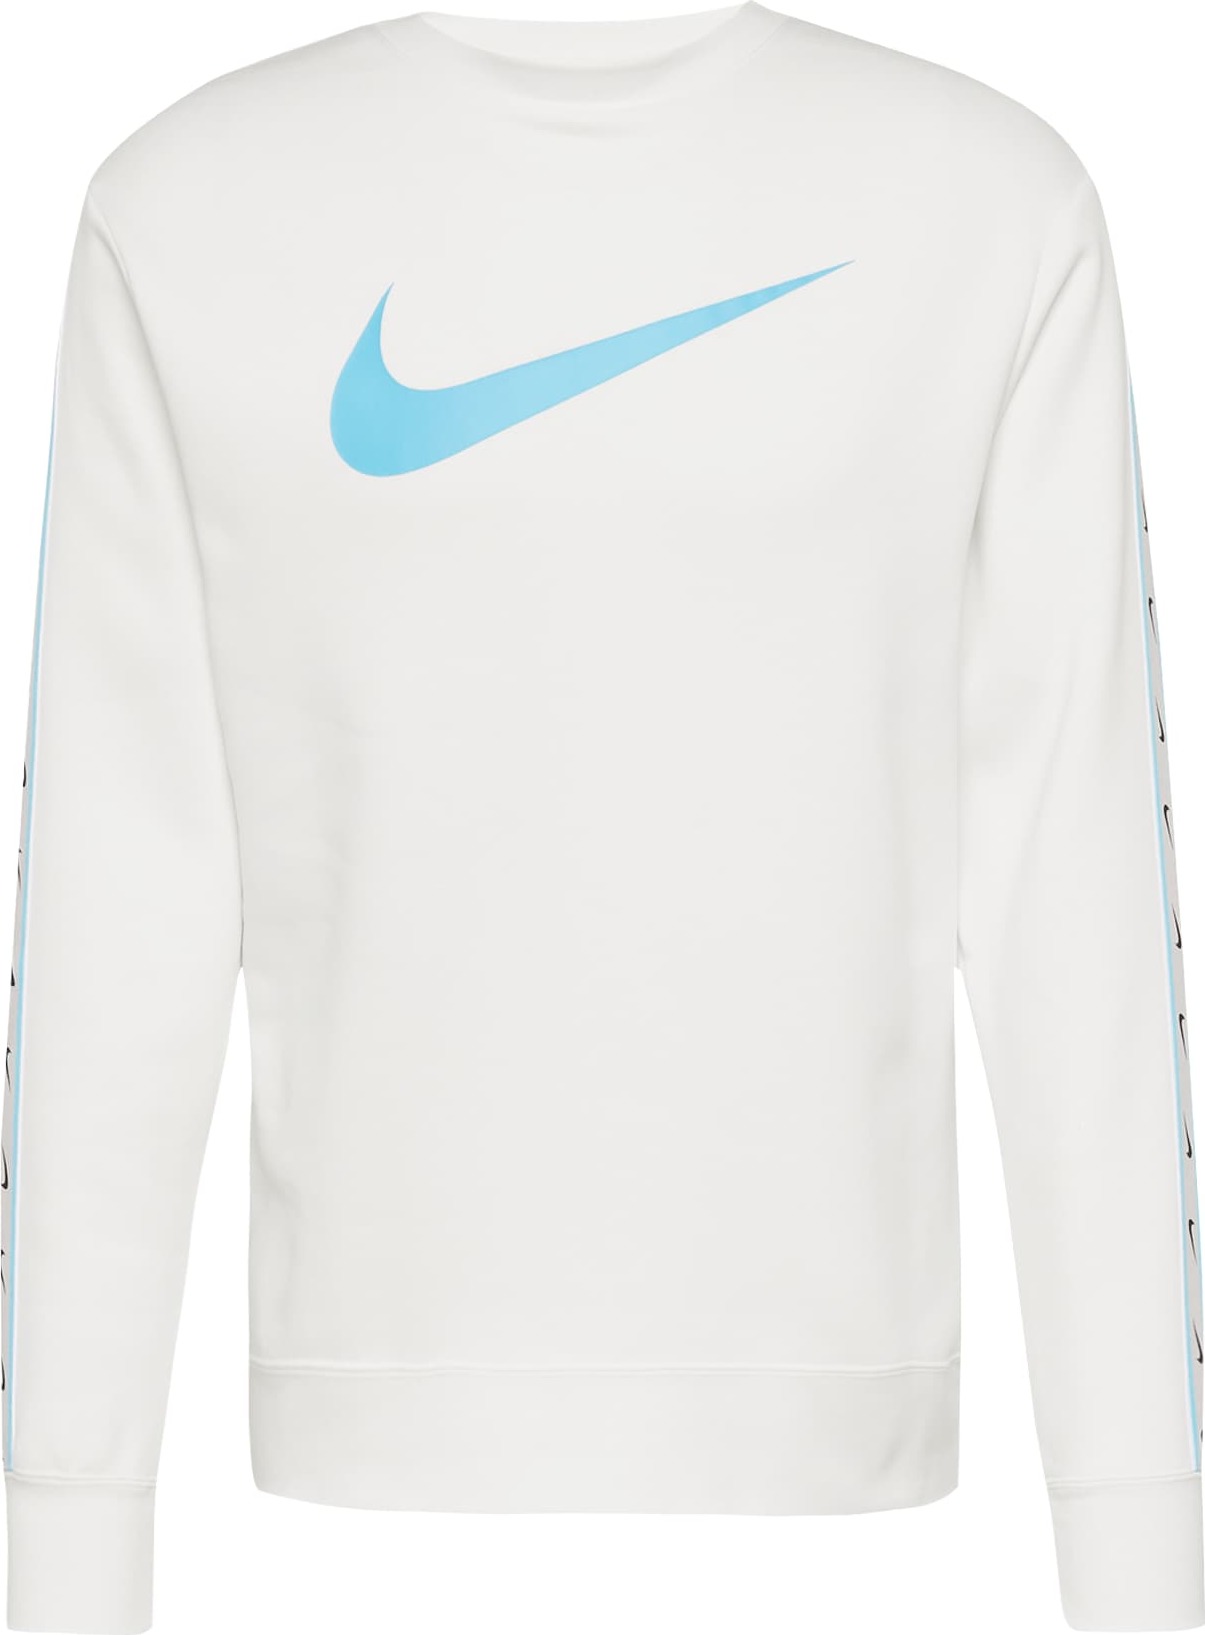 Mikina Nike Sportswear světlemodrá / černá / bílá